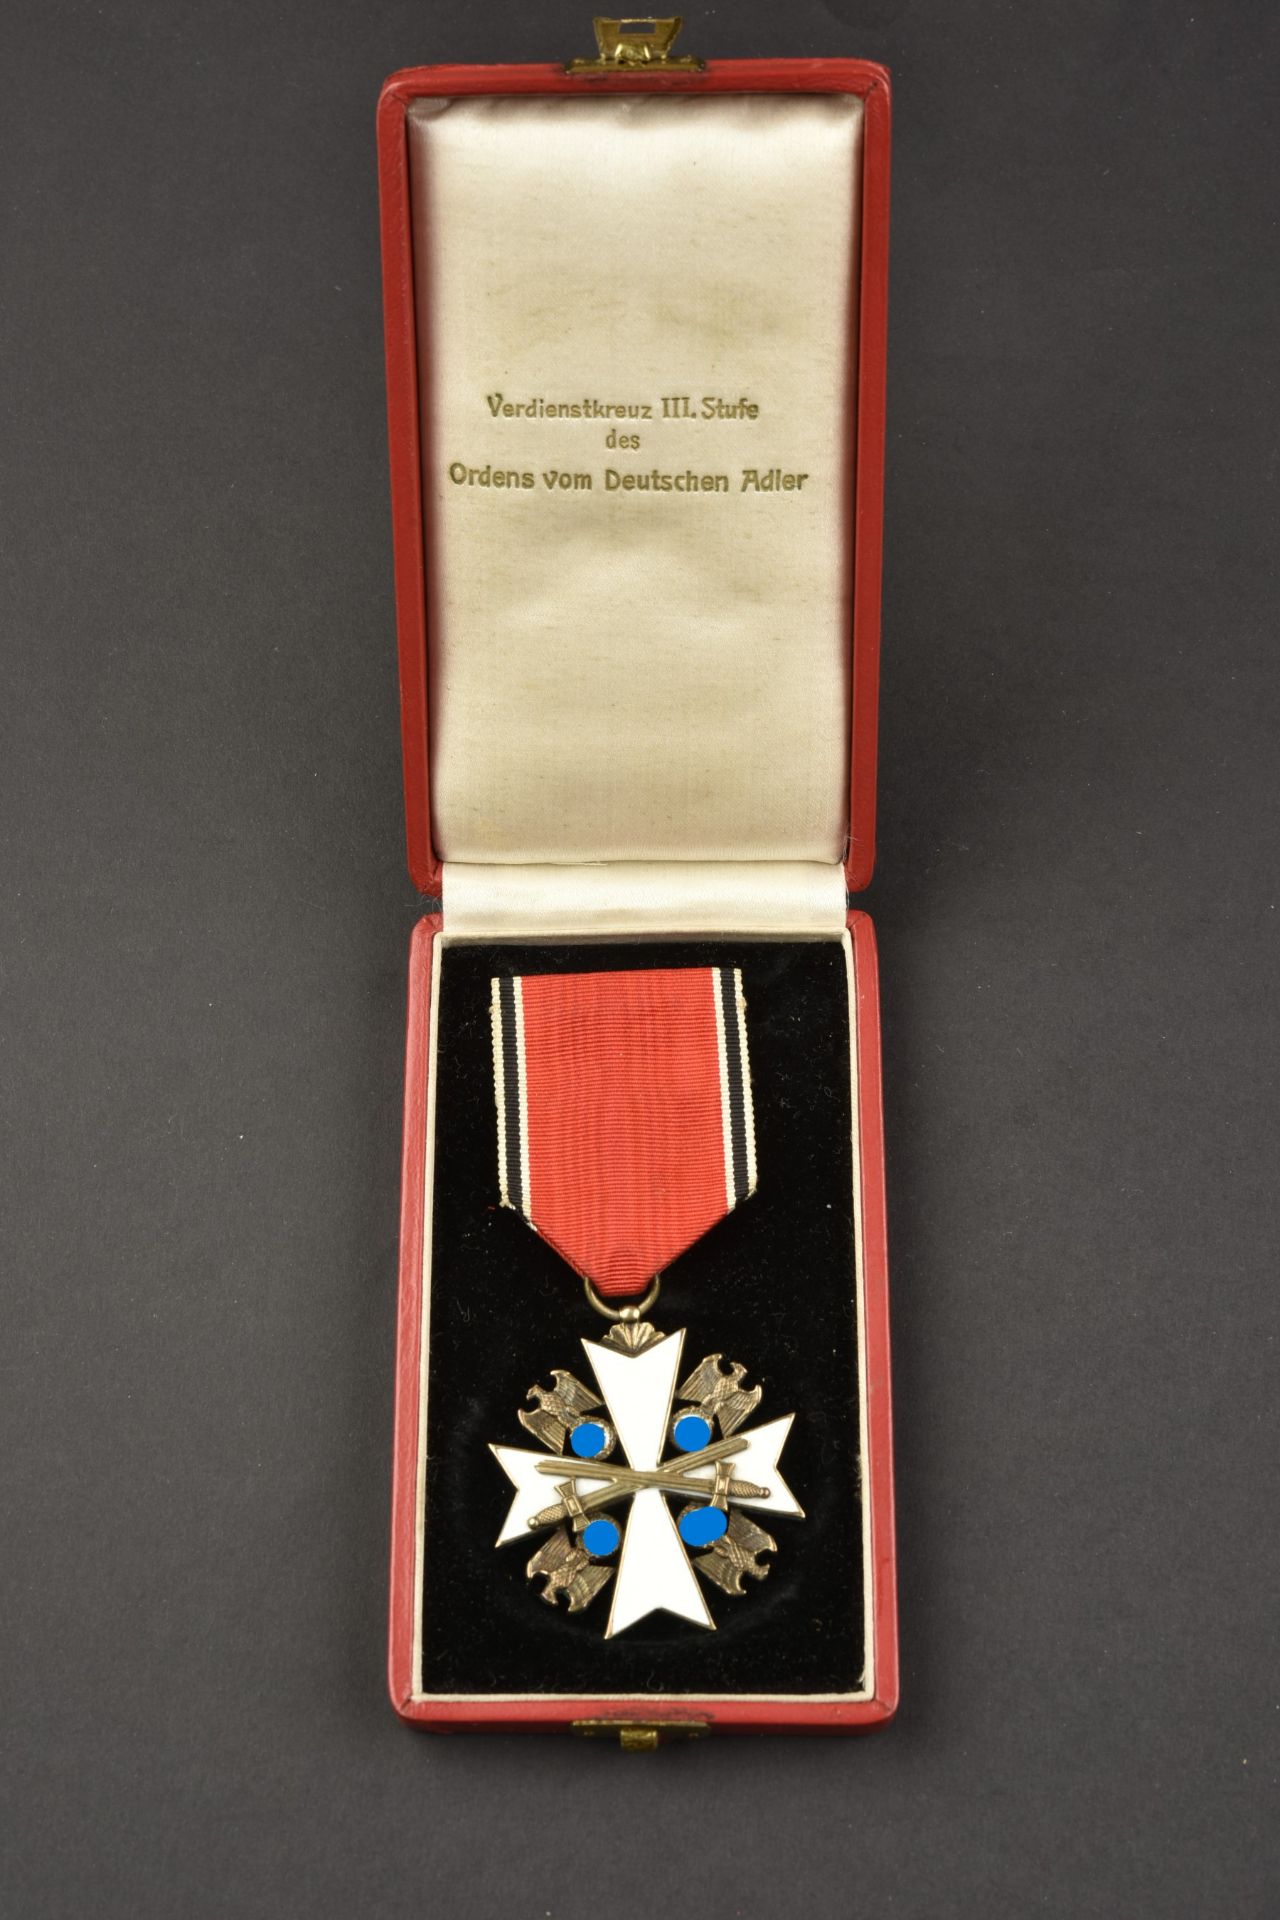 Medaille Deutsche Adler. Deutsche Adler medals.